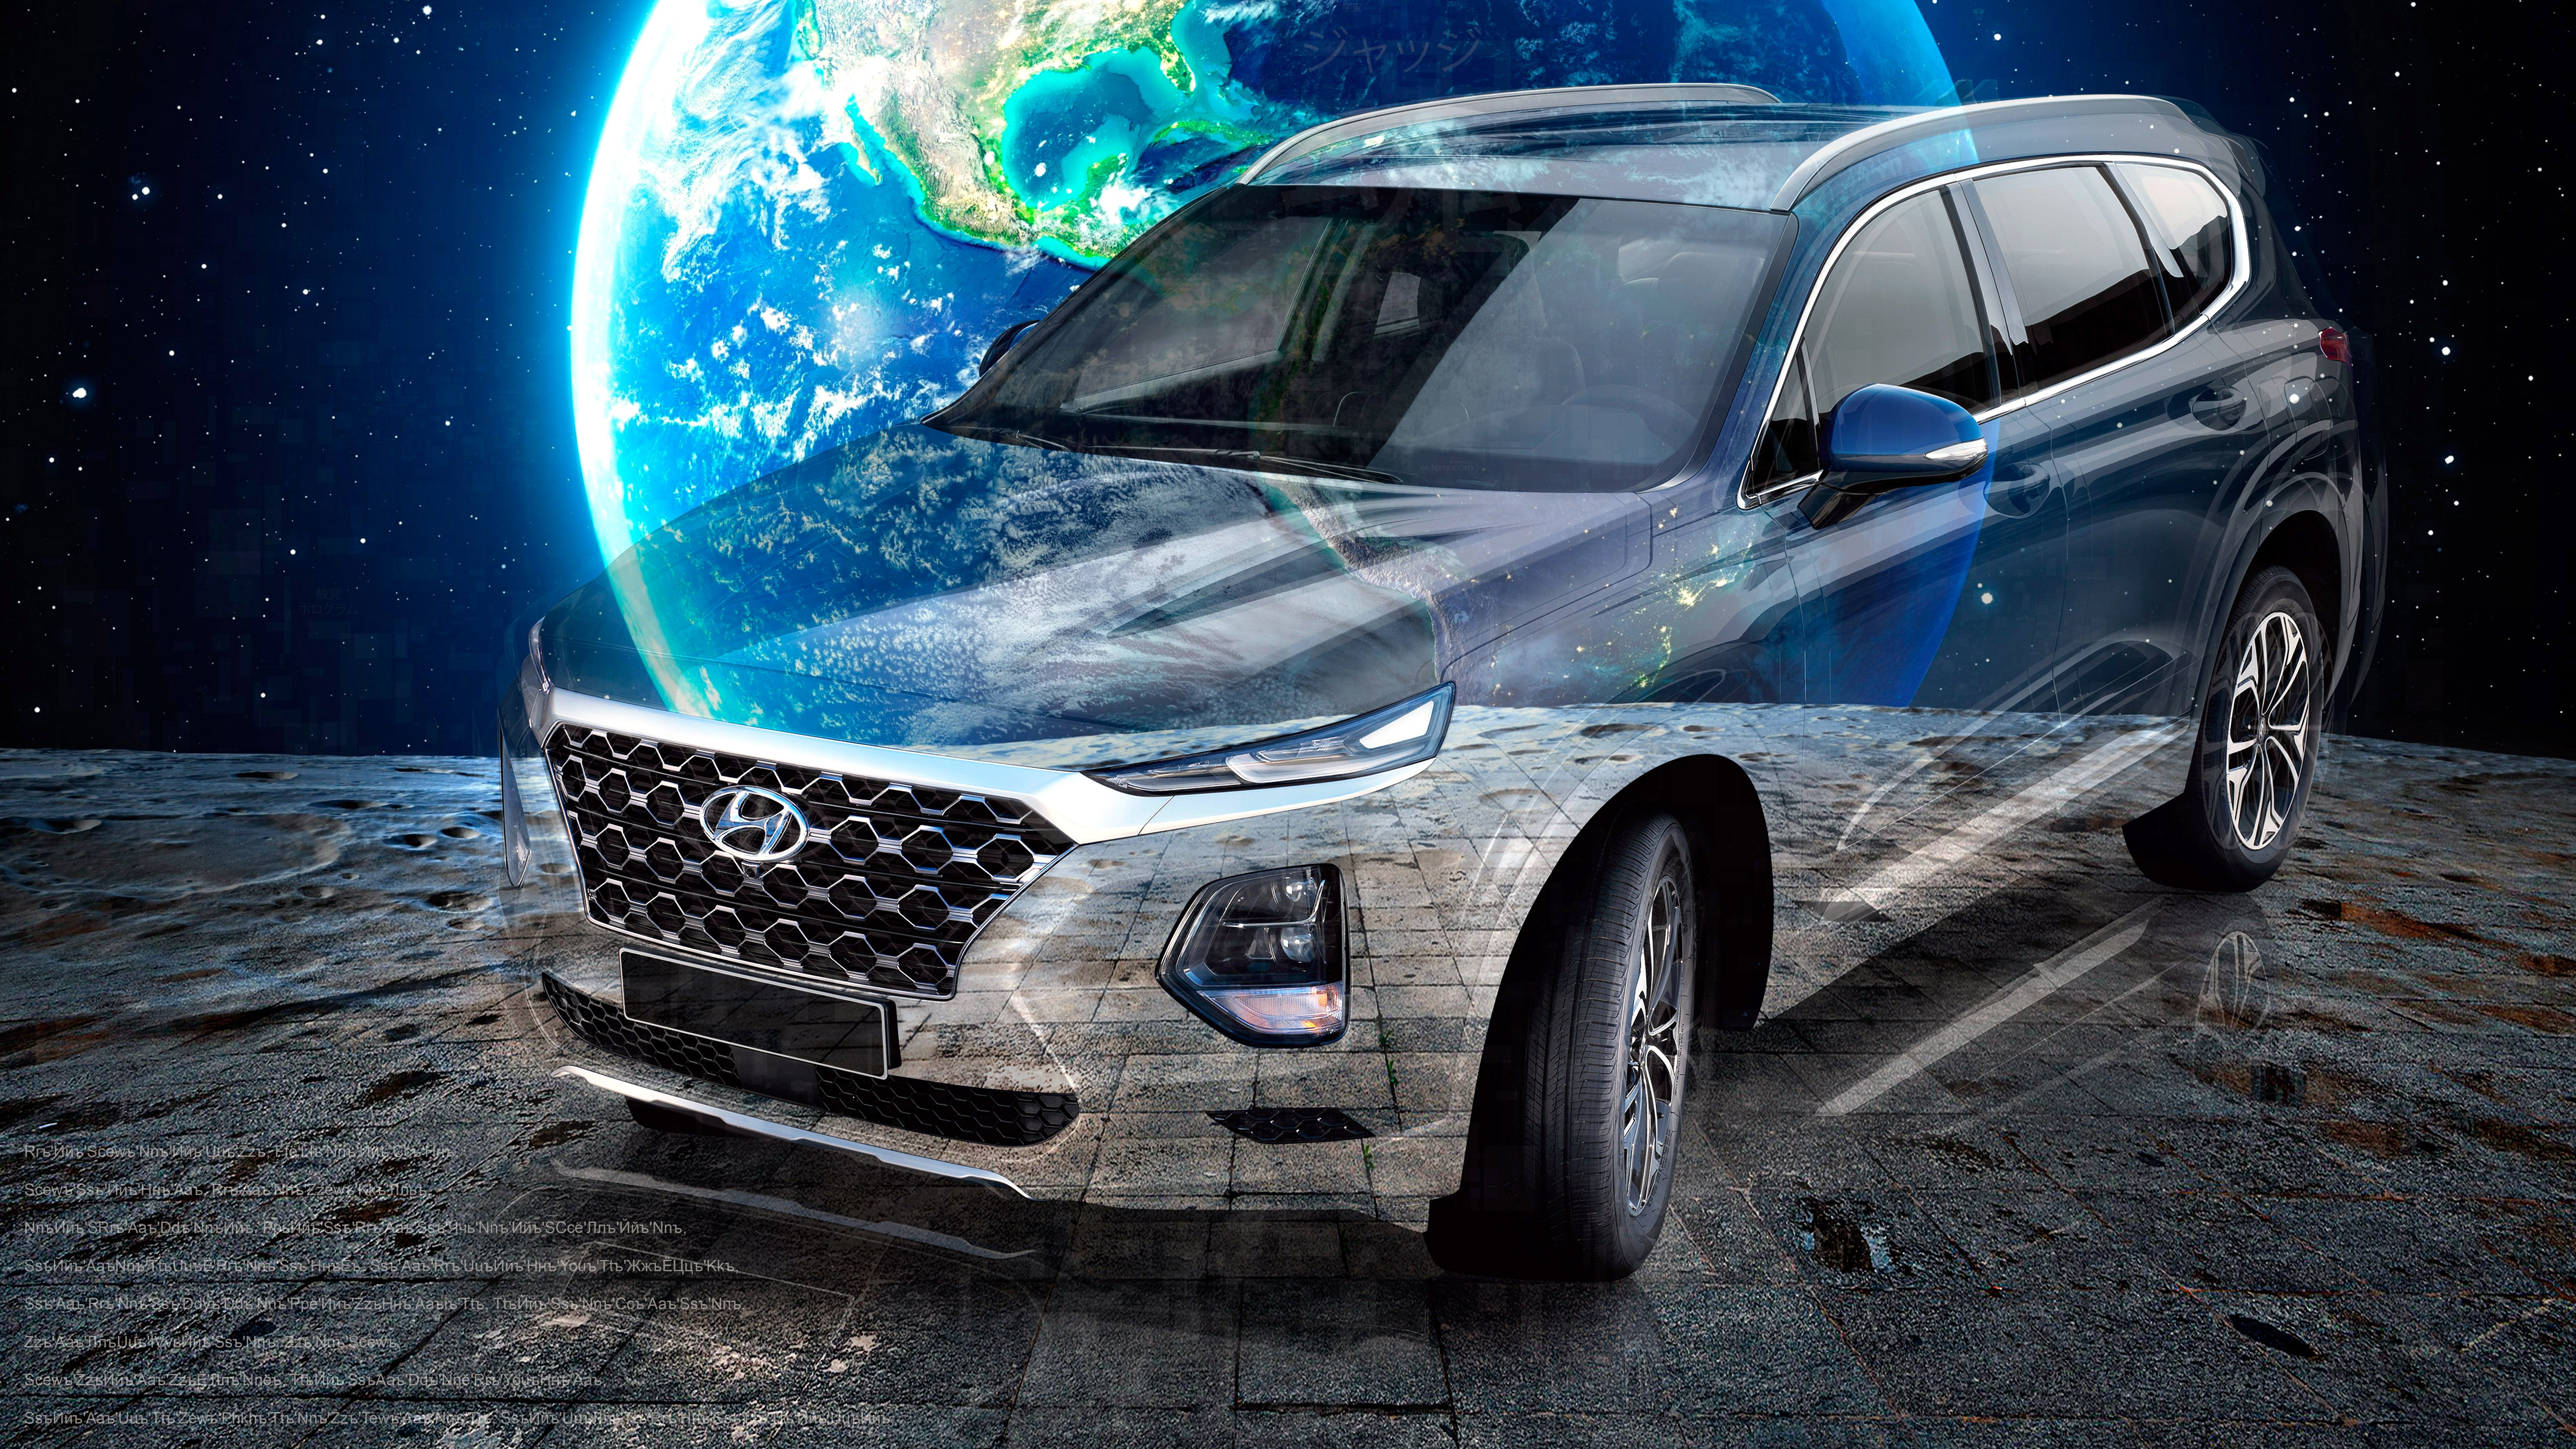 Hyundai-Santa-Fe-Super-Crystal-Judge-Soul-Planet-Earth-Art-Car